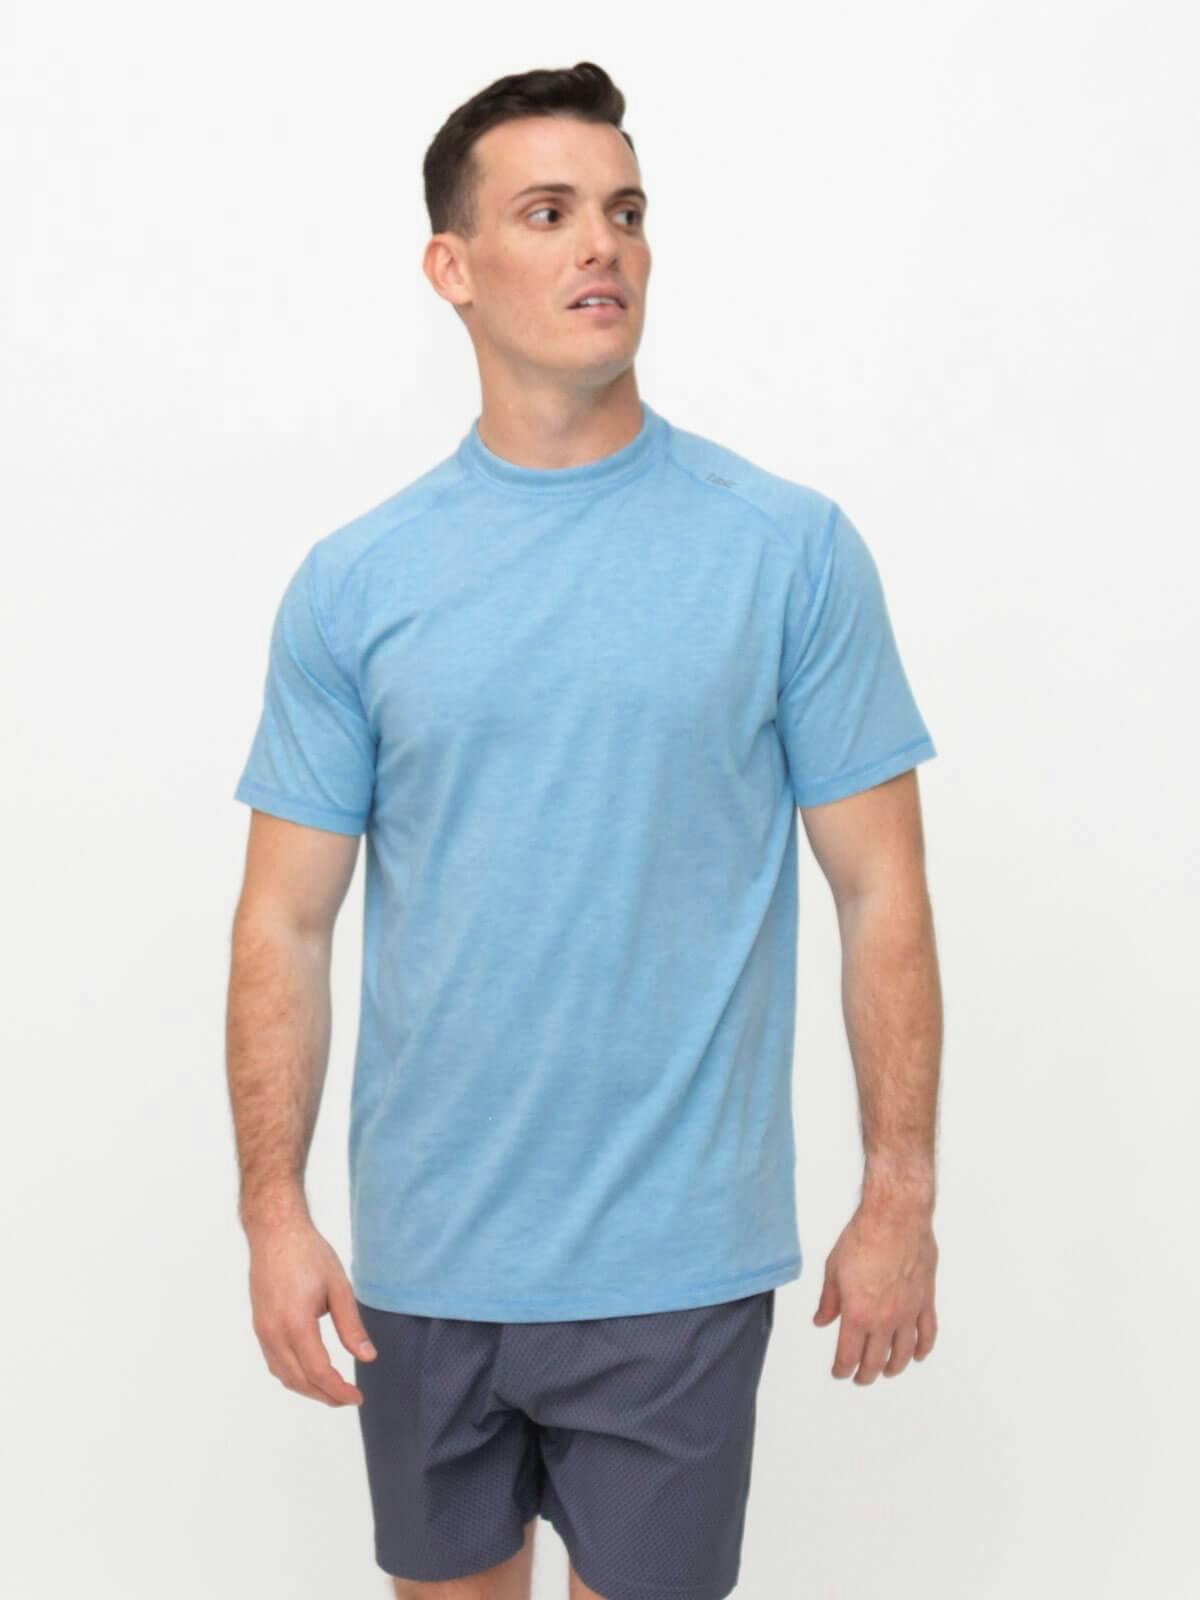 Tasc Performance - Men's Carrollton Fitness T-Shirt